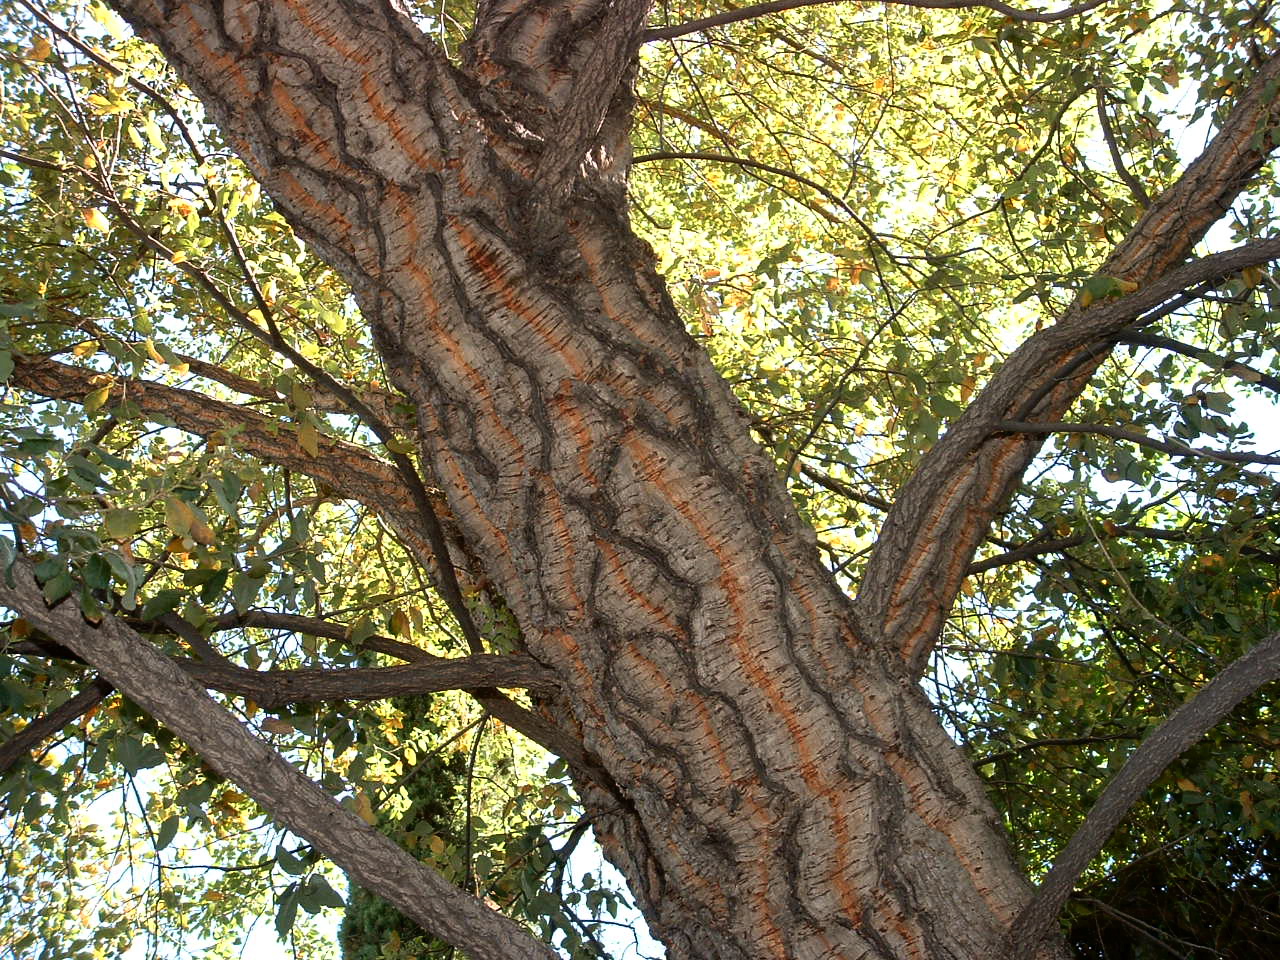 Remarkable bark of the Cork Oak